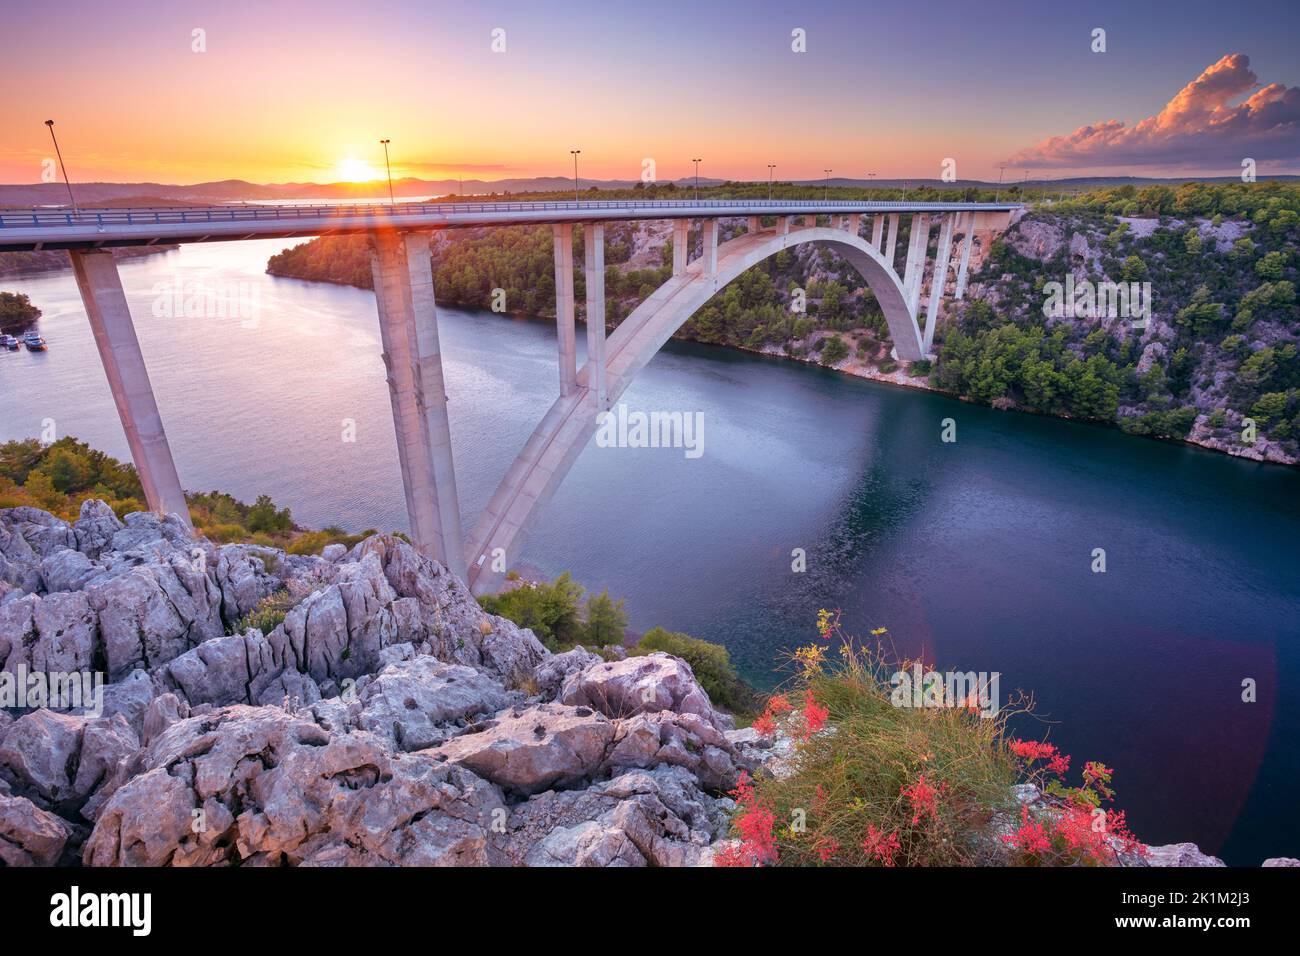 Krka Bridge, Croatia. Image of concrete arch bridge Krka Bridge spanning the Krka River at sunset. Stock Photo